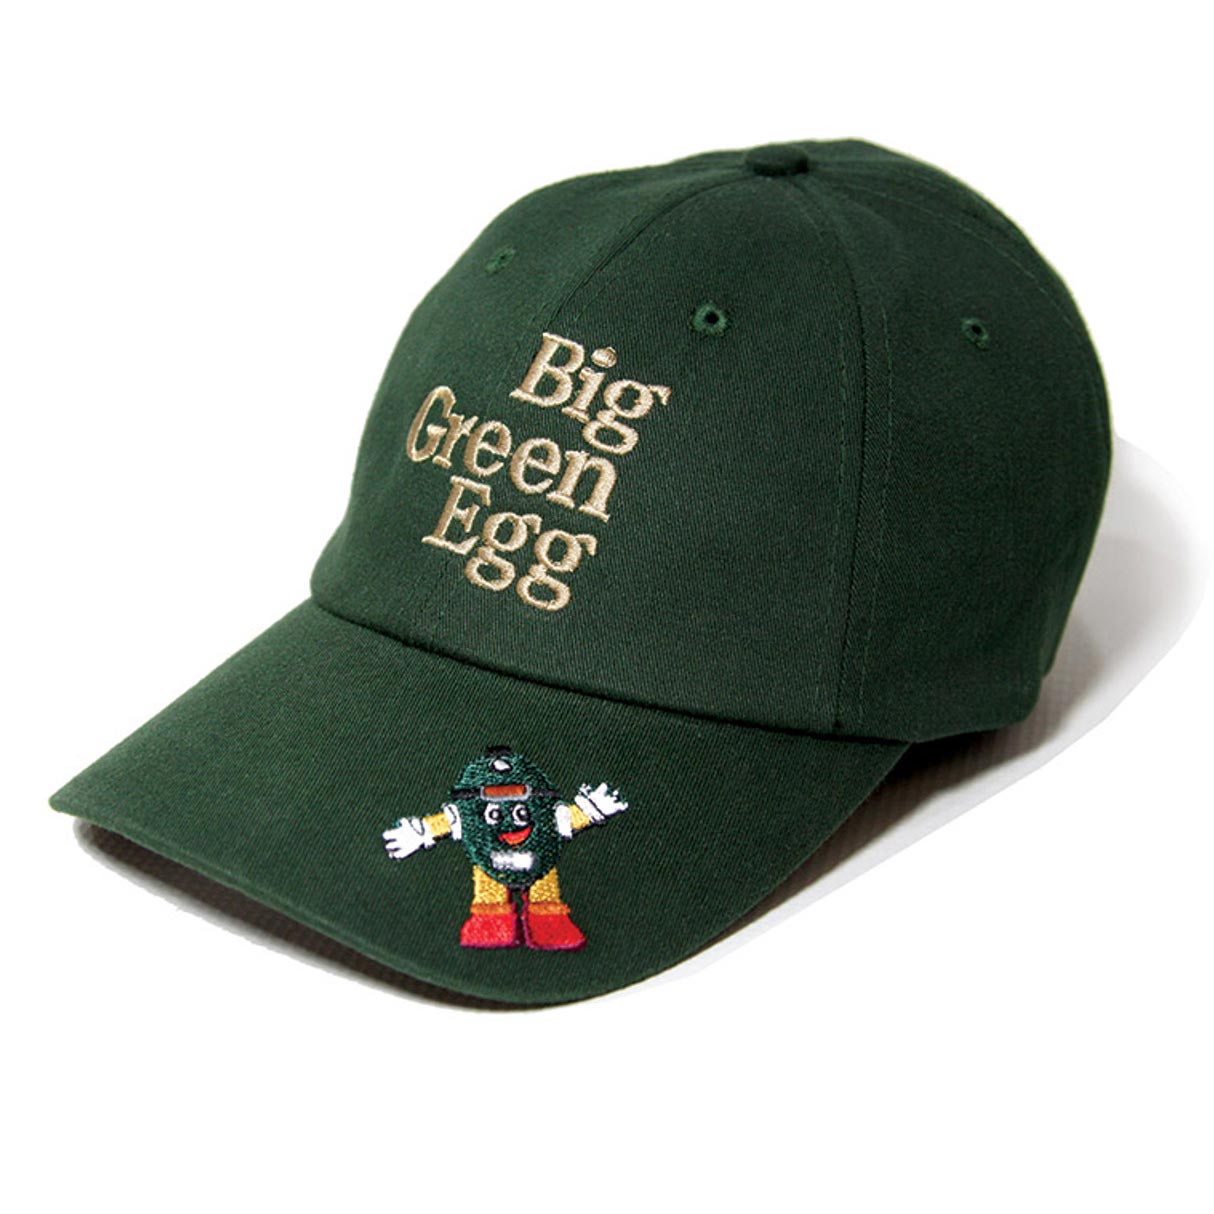 Mr. EGGhead Green Cap